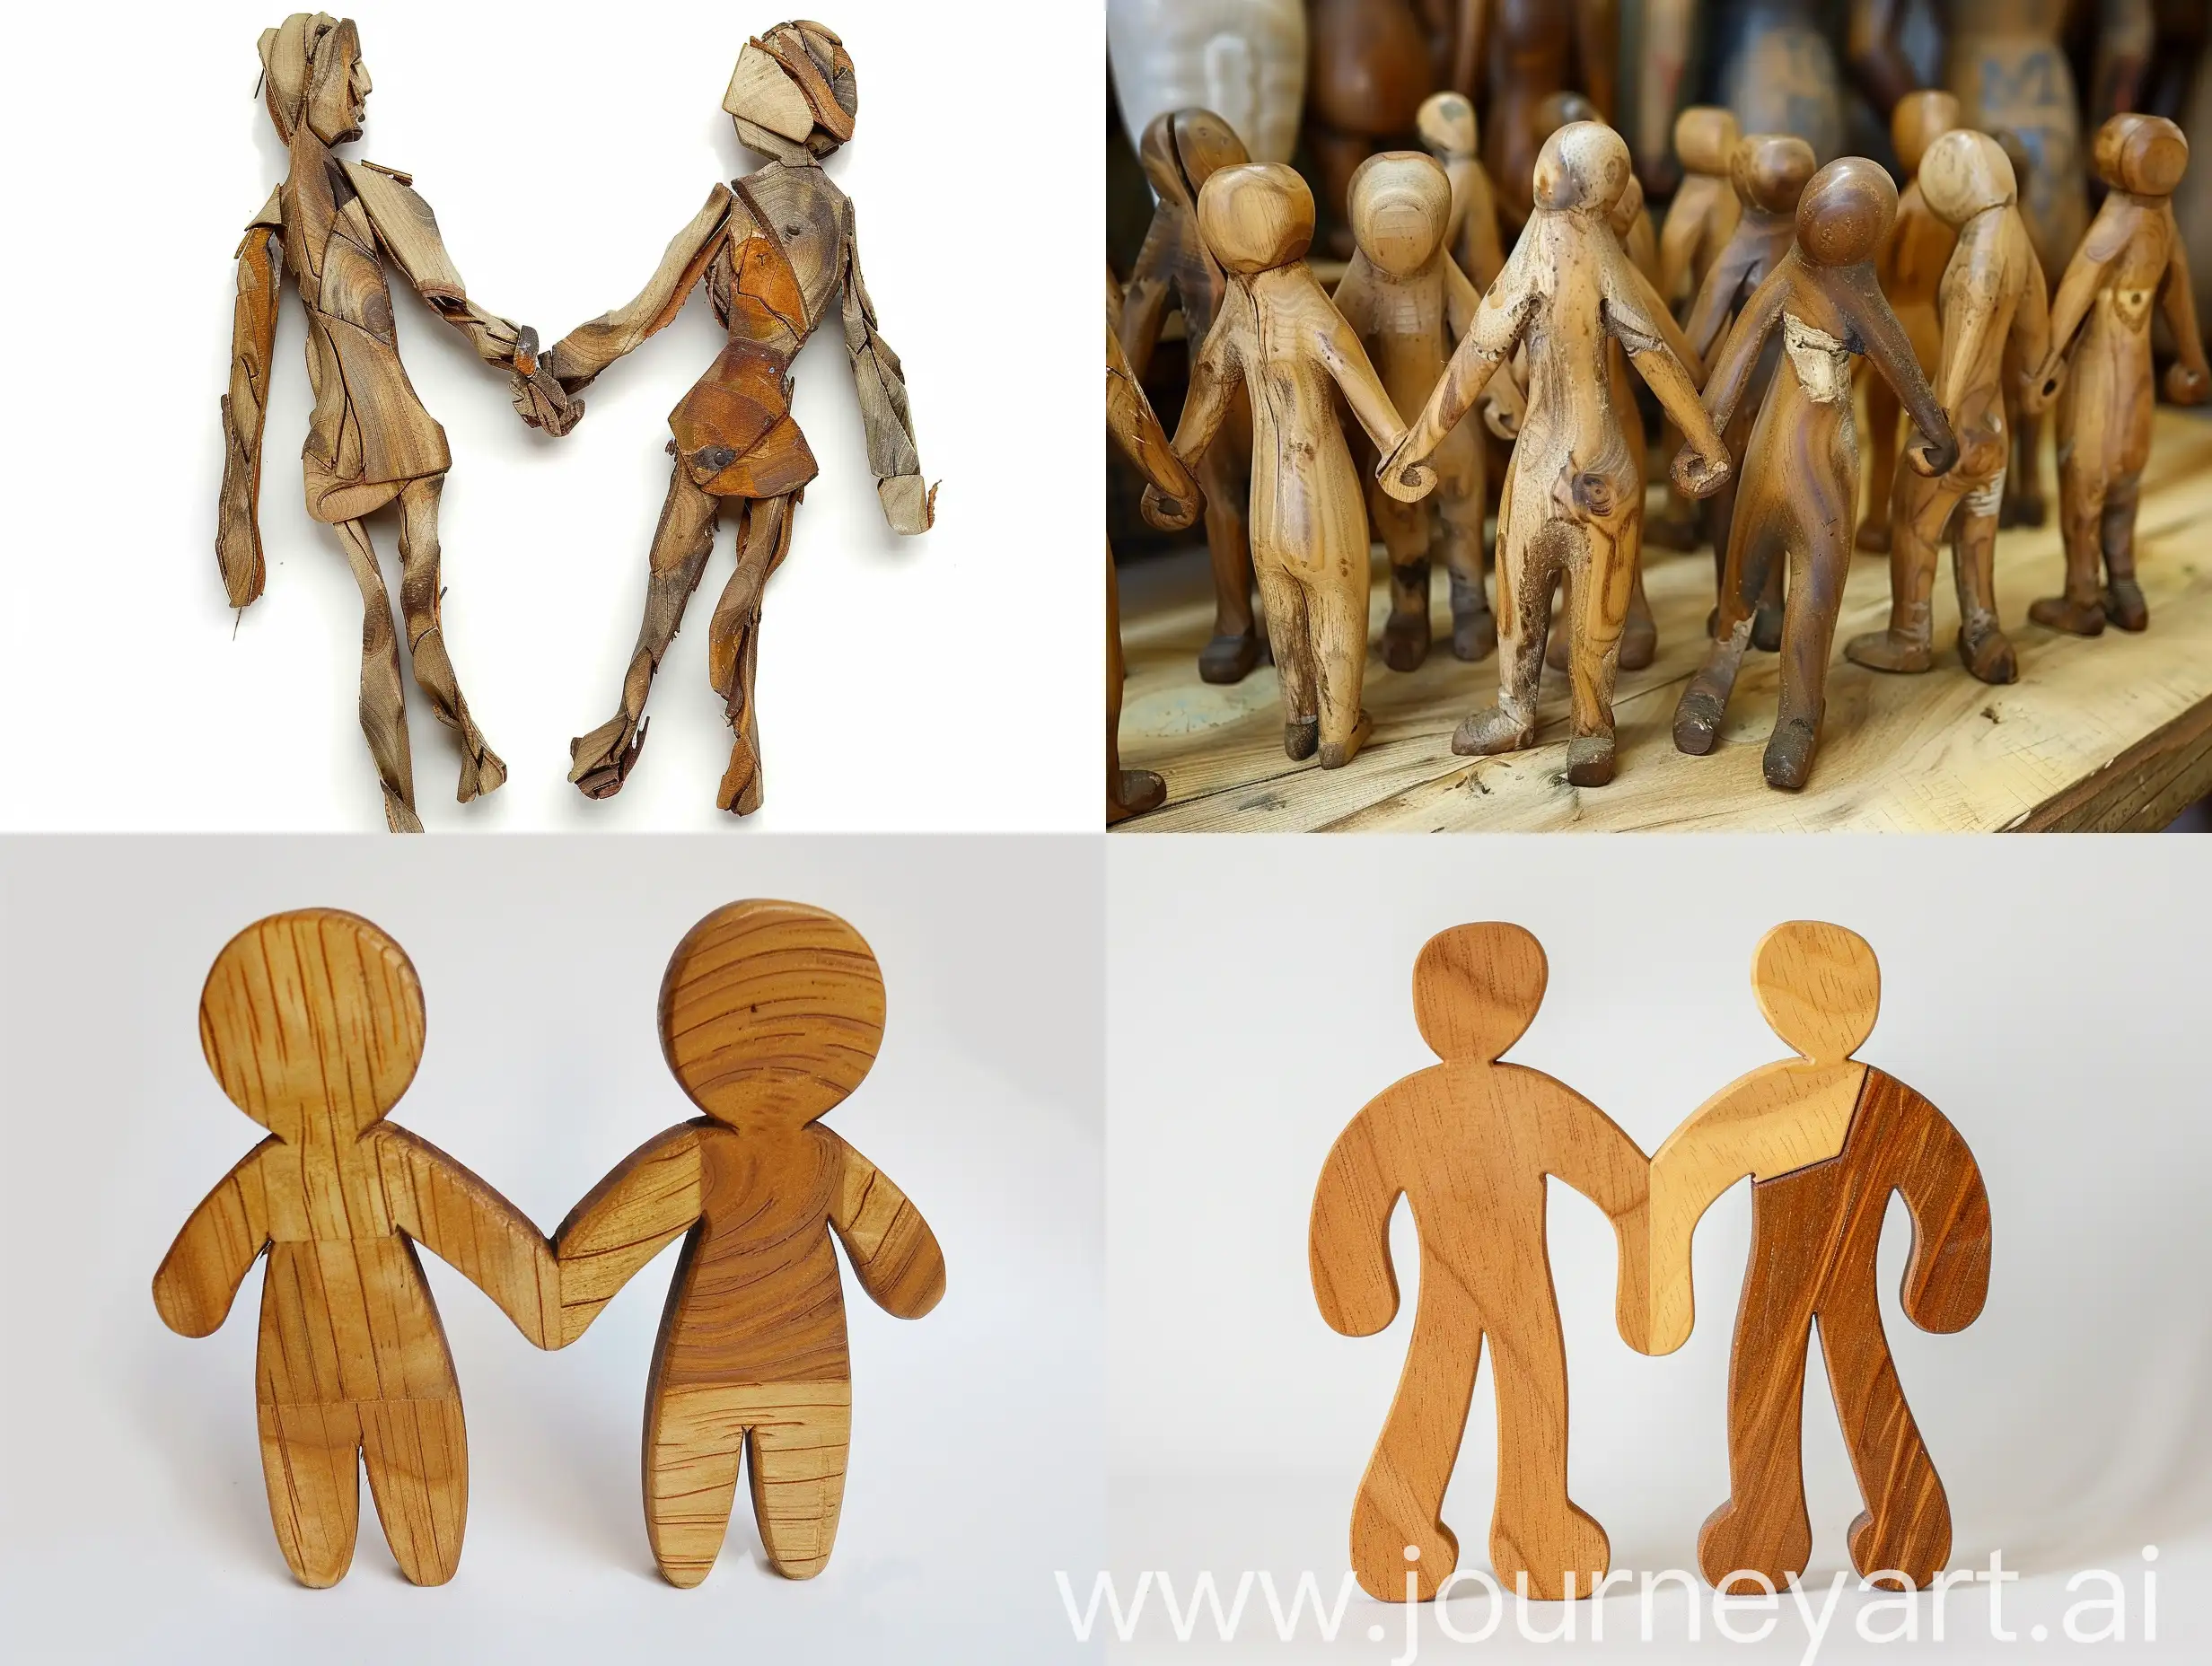 Wooden-Figures-Holding-Hands-in-a-Forest-Landscape